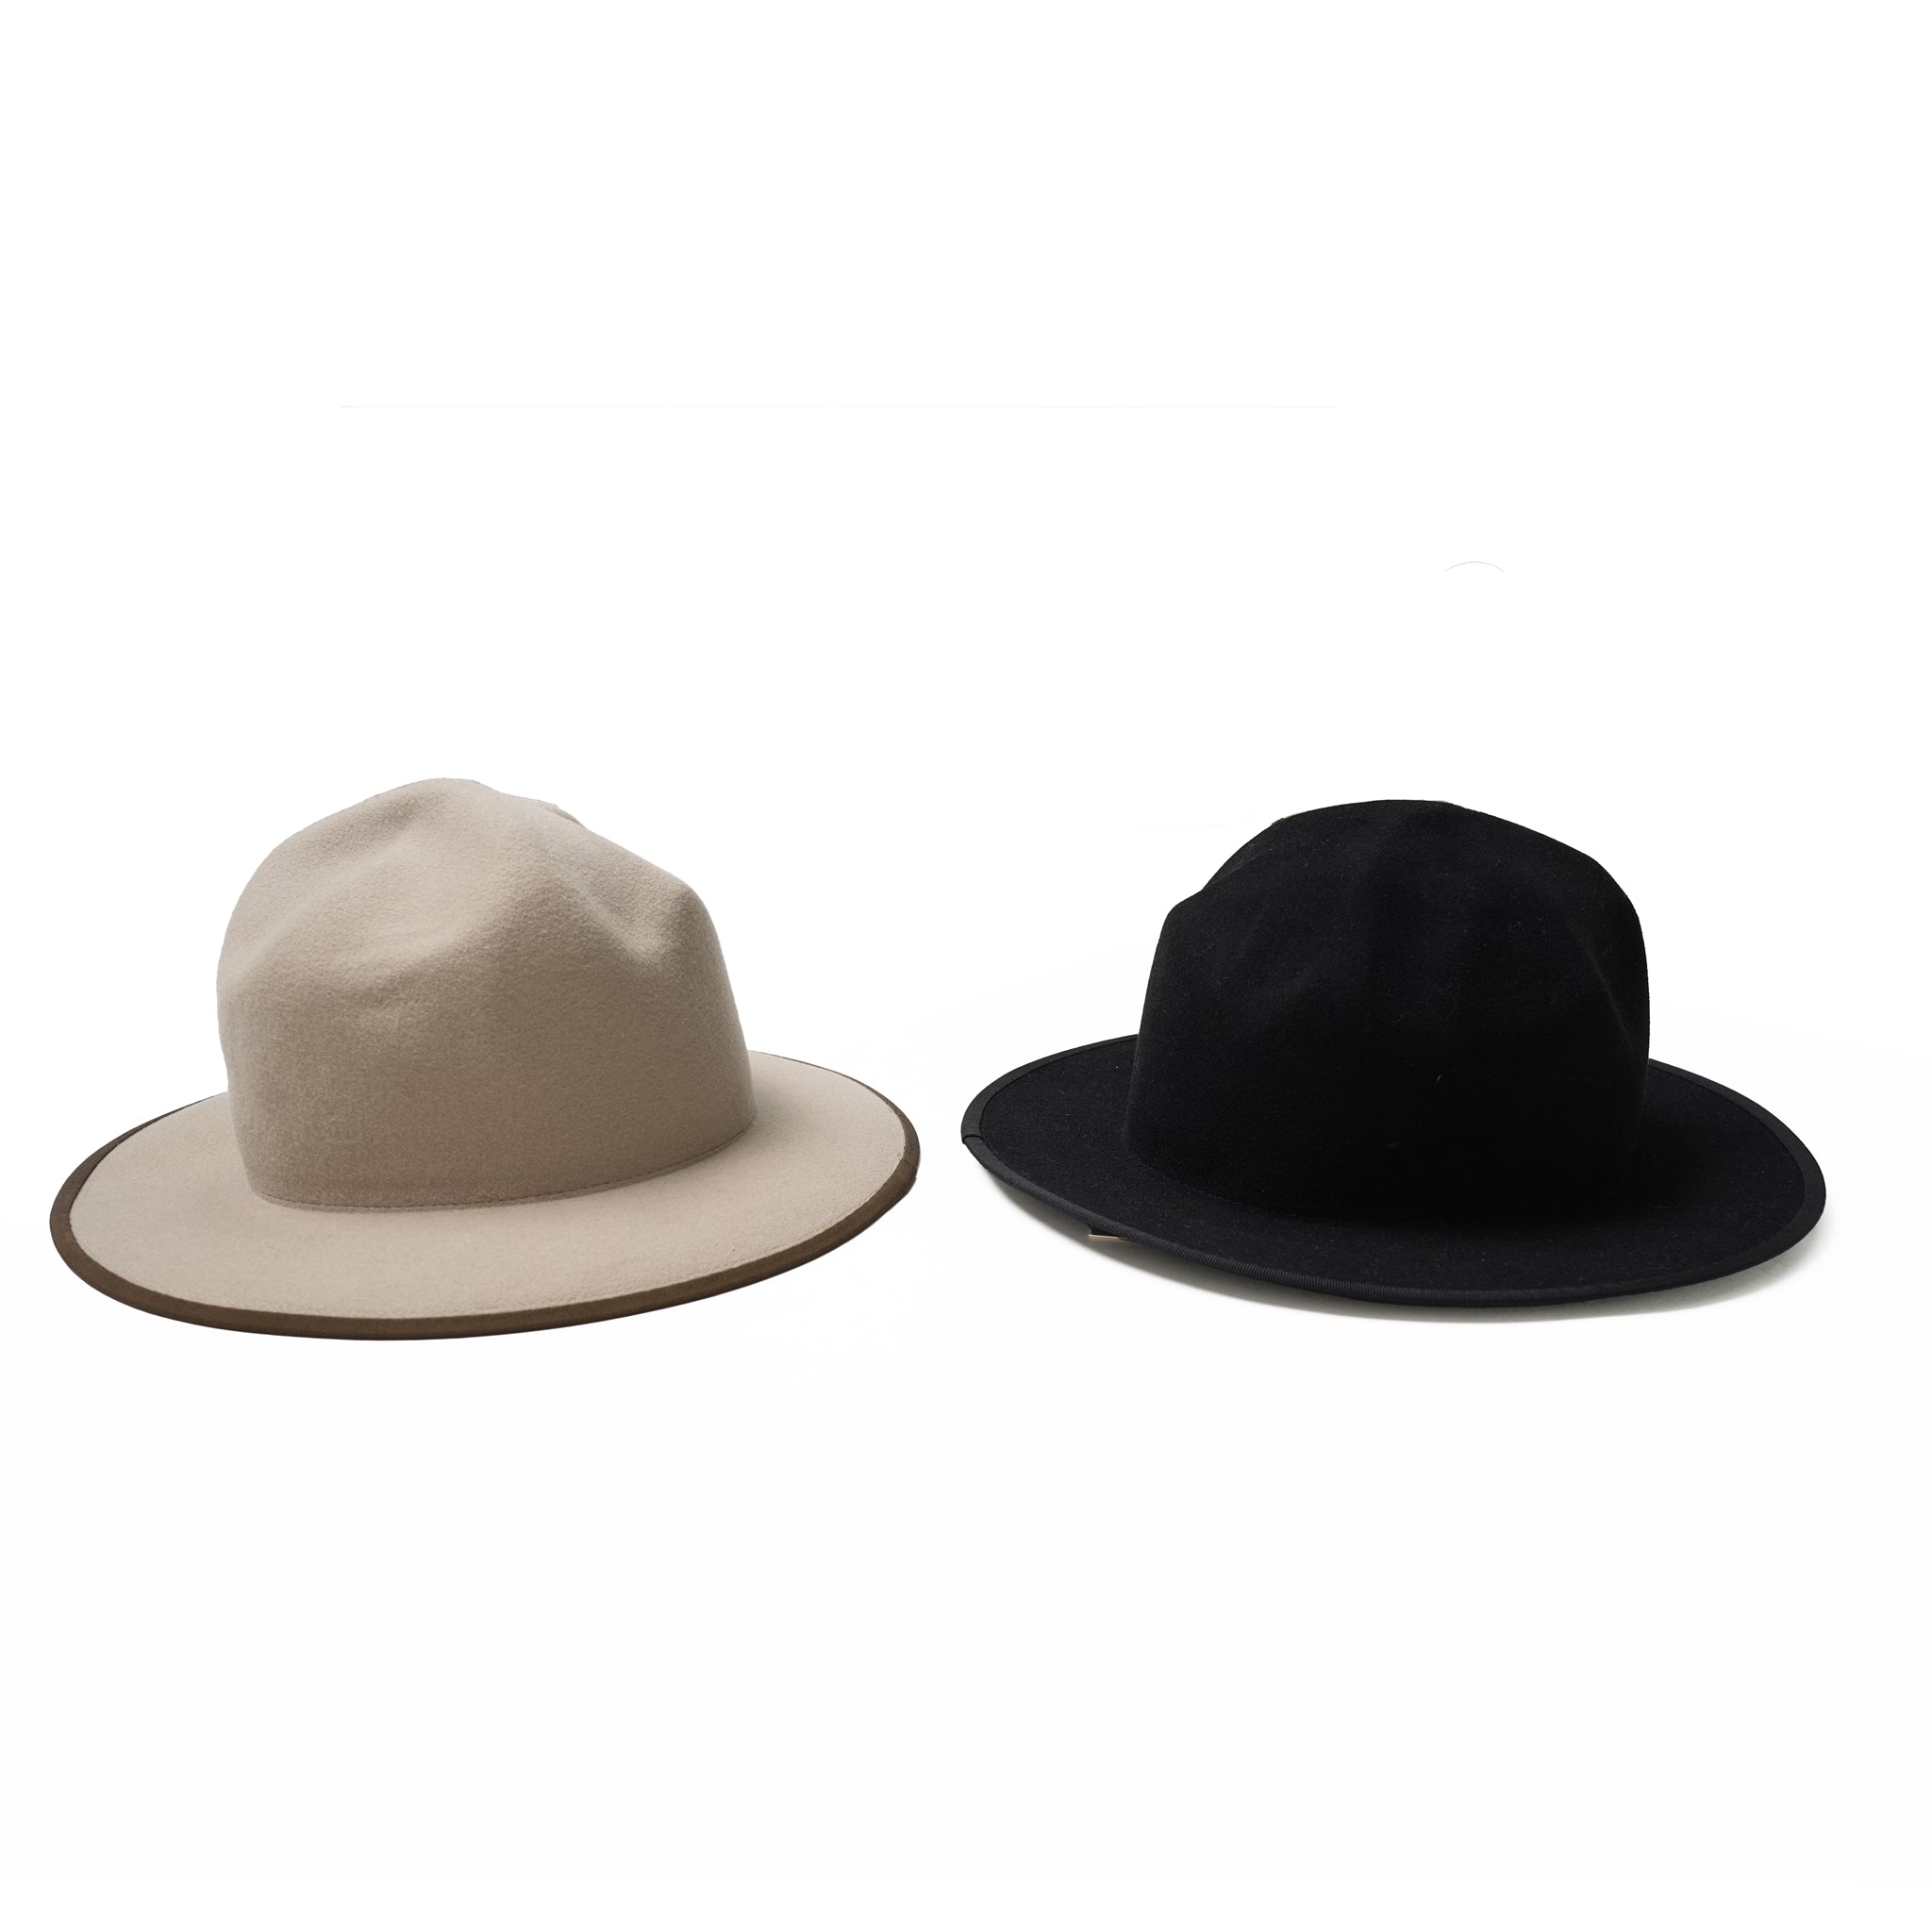 No:RL-23-1326 | Name:Fur Wool Mountain Hat | Size:Free |Color:Black/Light Gray/【RACAL_ラカル】